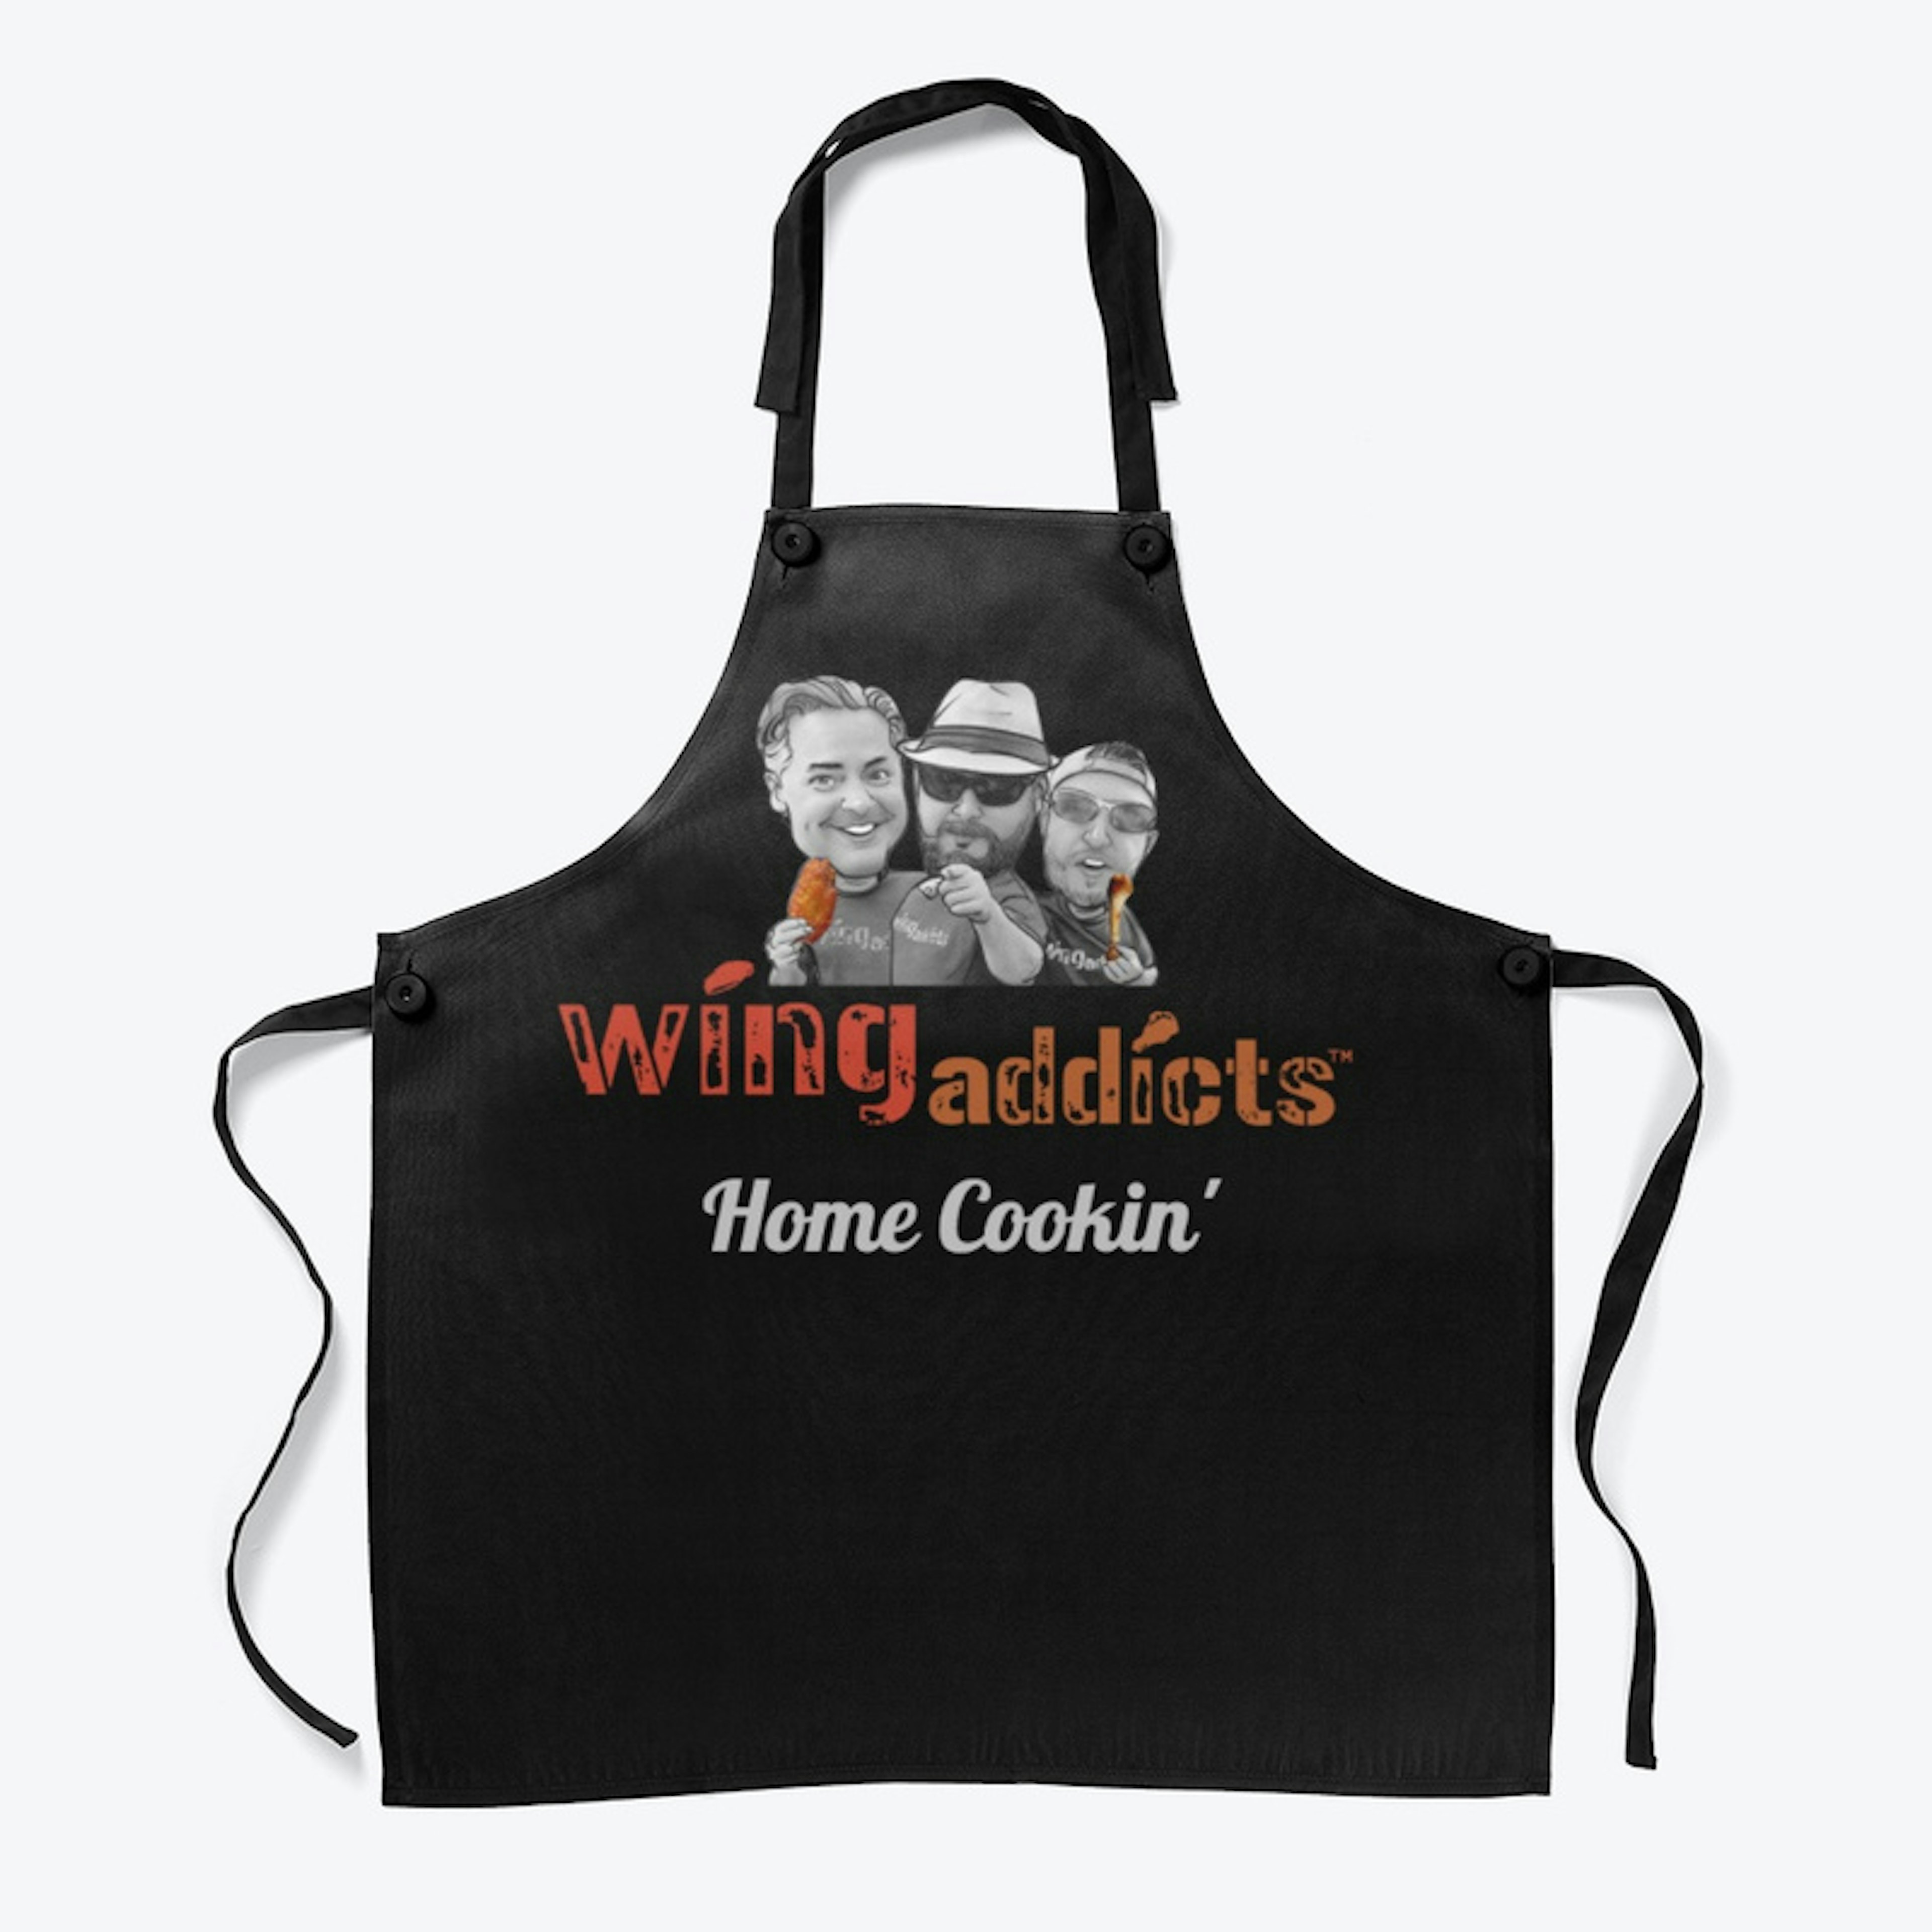 Wingaddicts Home Cookin Apron